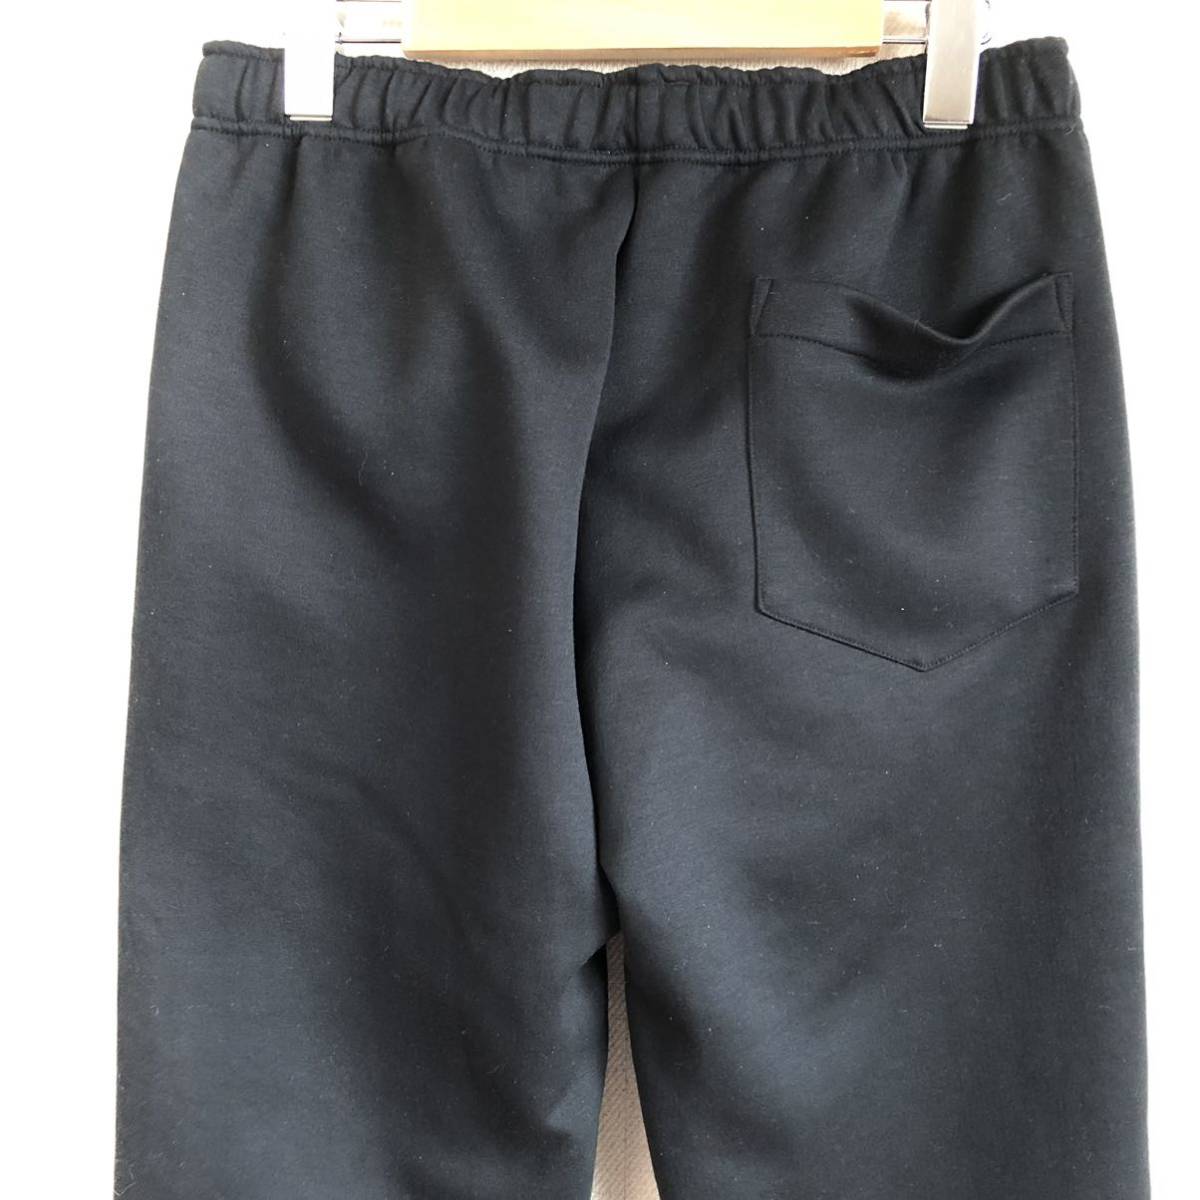 [MIZUNO] Mizuno truck pants jersey black black men's sport training waist rubber casual bottoms L/Y4294BB